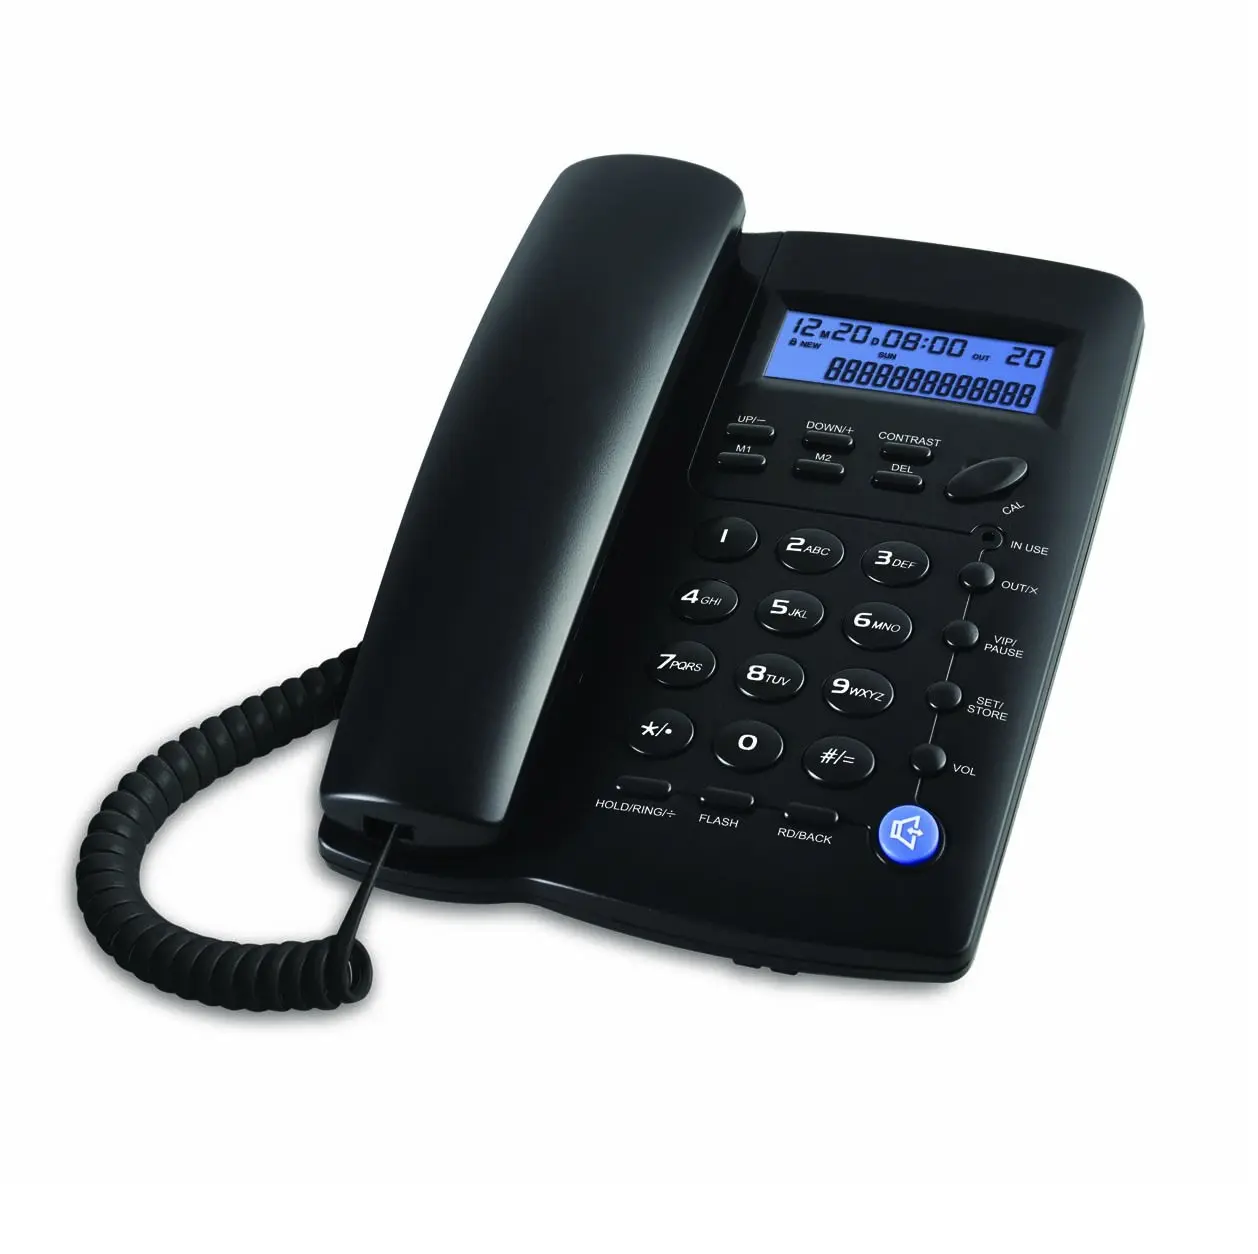 Landline corded phone adjustable volume hands-free home office hotel room telephones